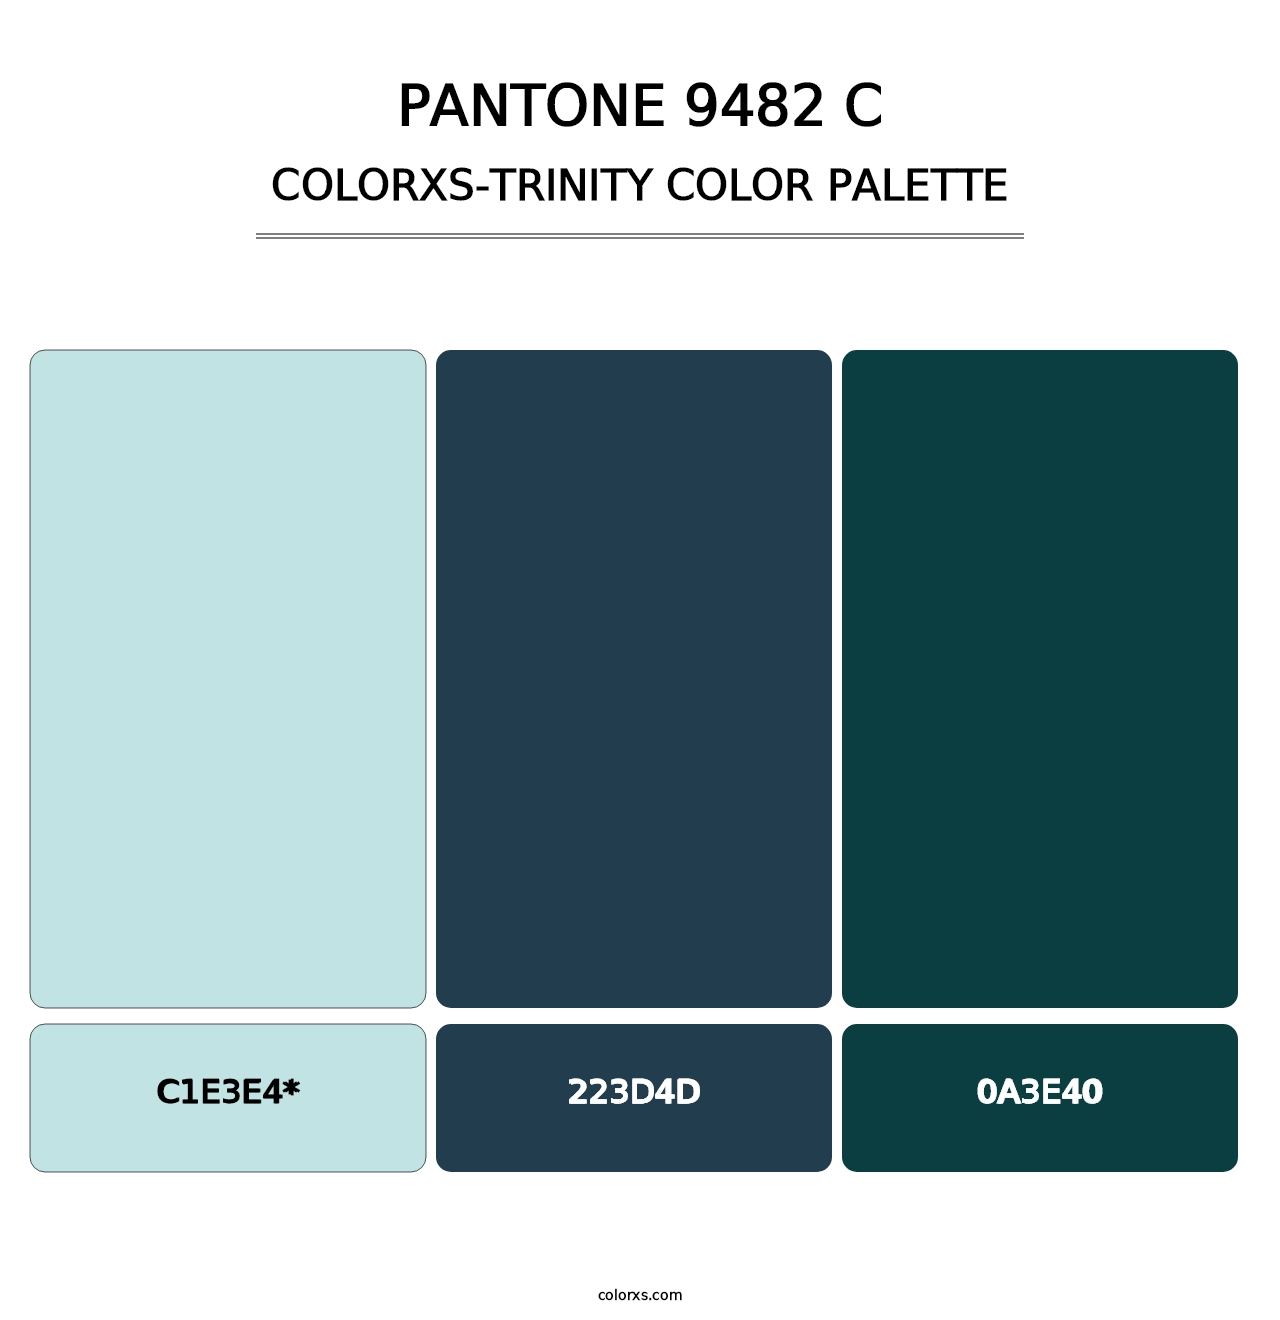 PANTONE 9482 C - Colorxs Trinity Palette